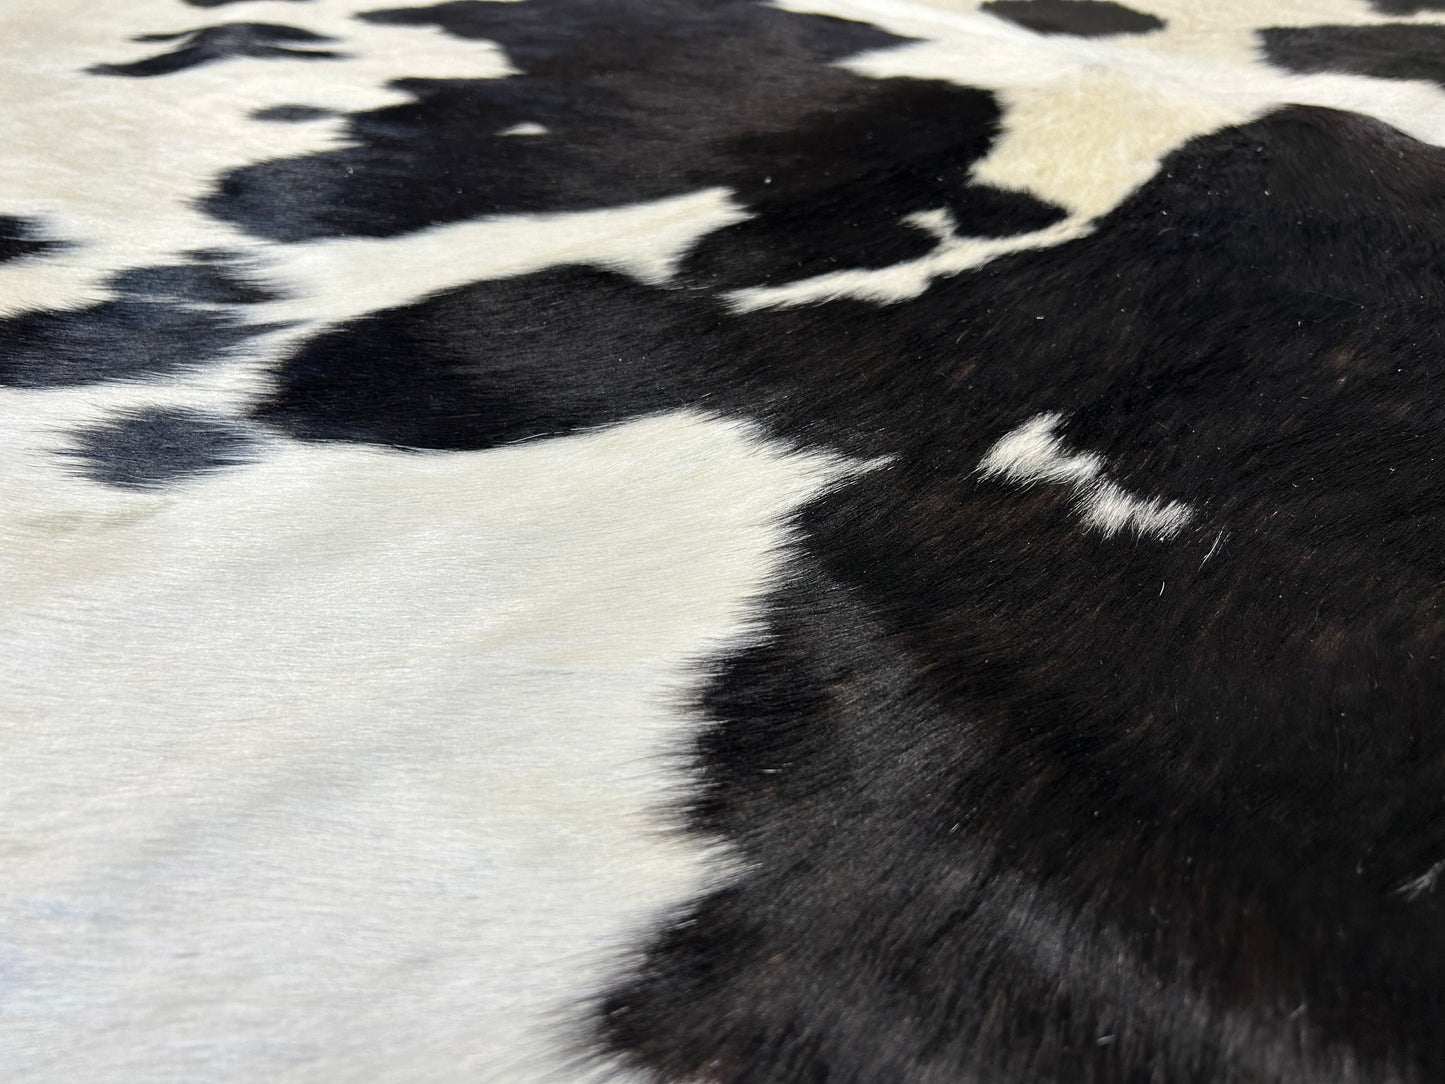 S-1: Cowhide rug - Medium black and white